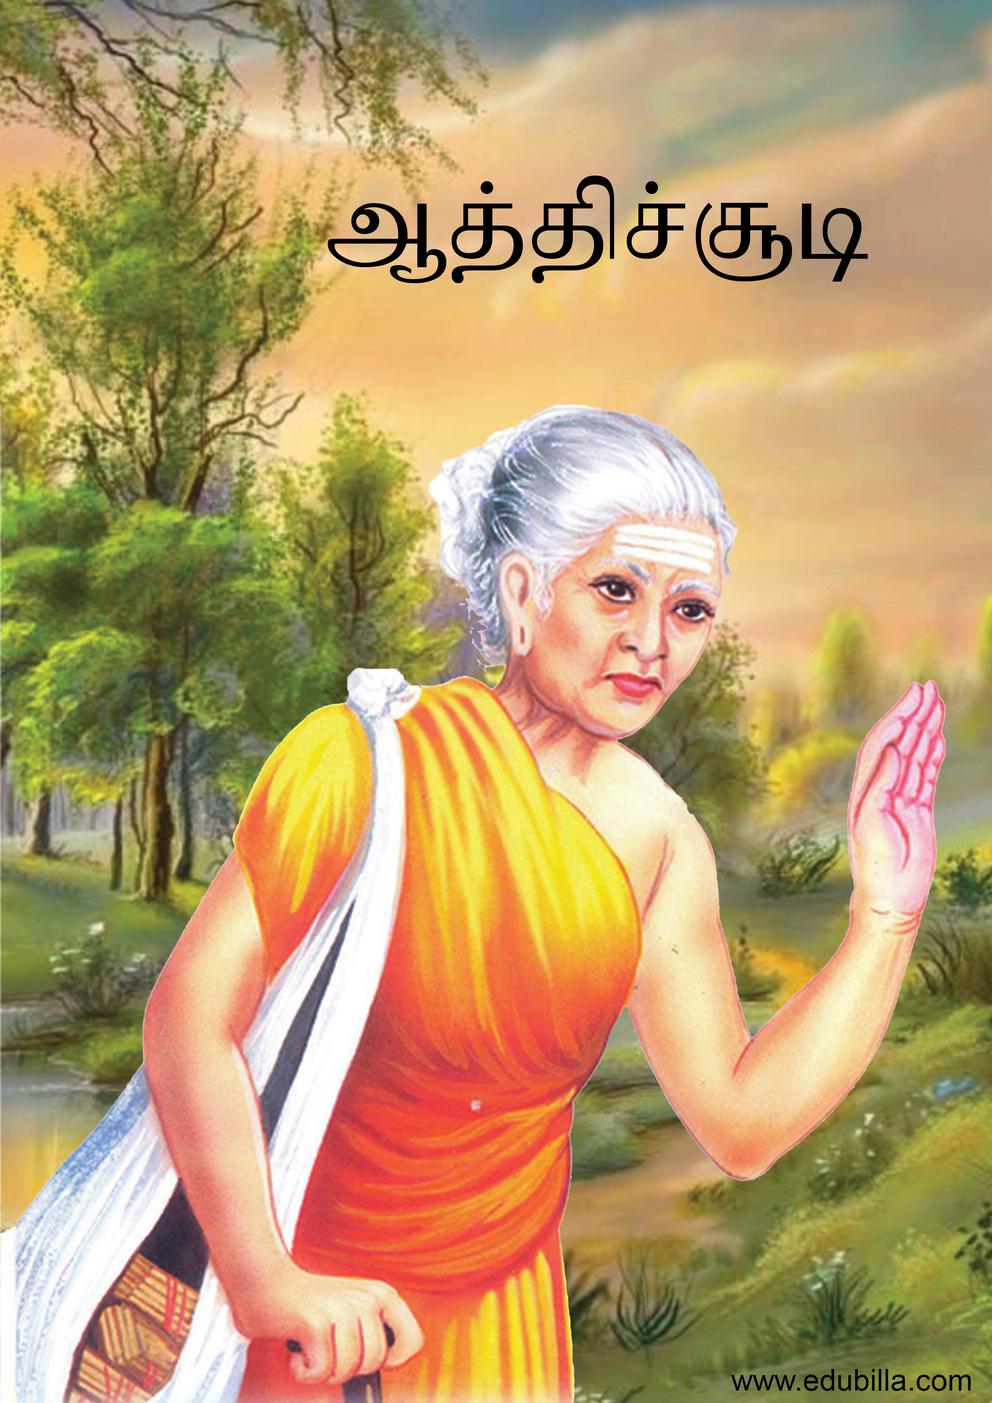 aathichudi in tamil pdf download